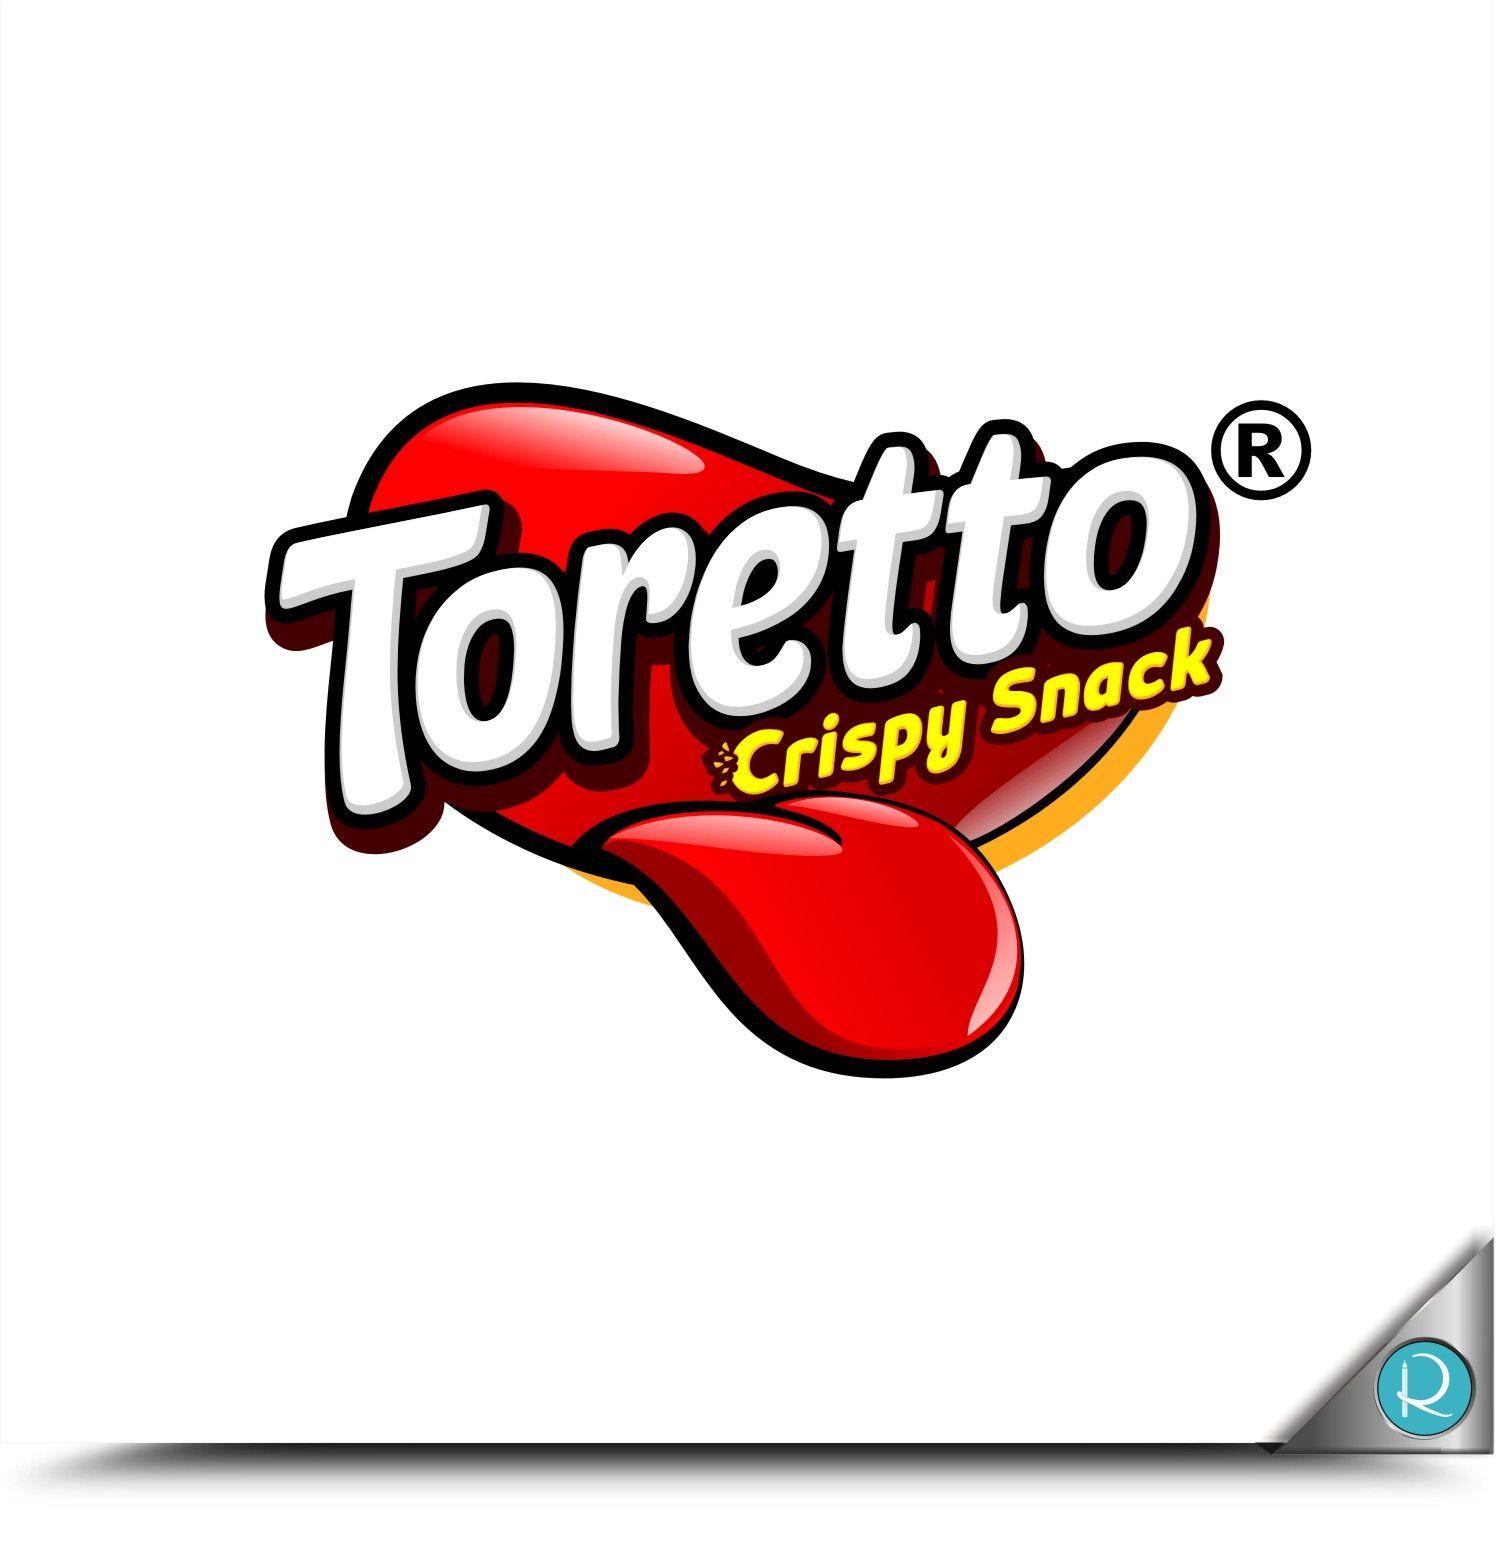 Snack Logo - Sribu: Logo Design Design for Brand Name Toretto